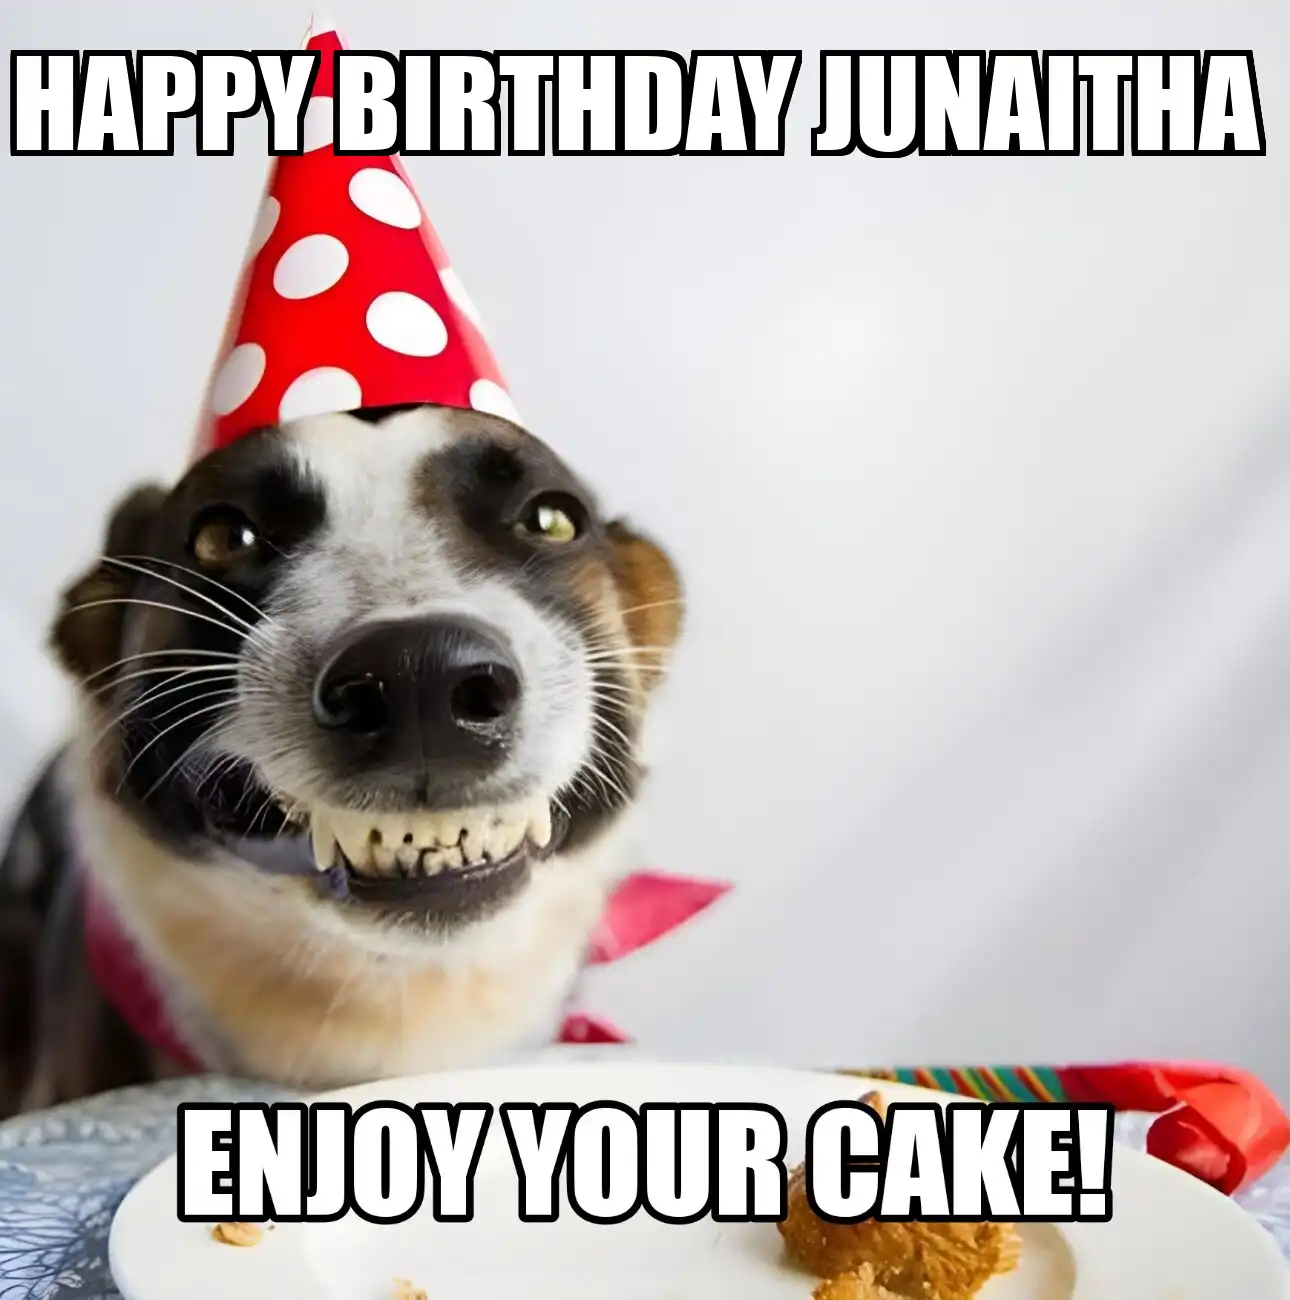 Happy Birthday Junaitha Enjoy Your Cake Dog Meme